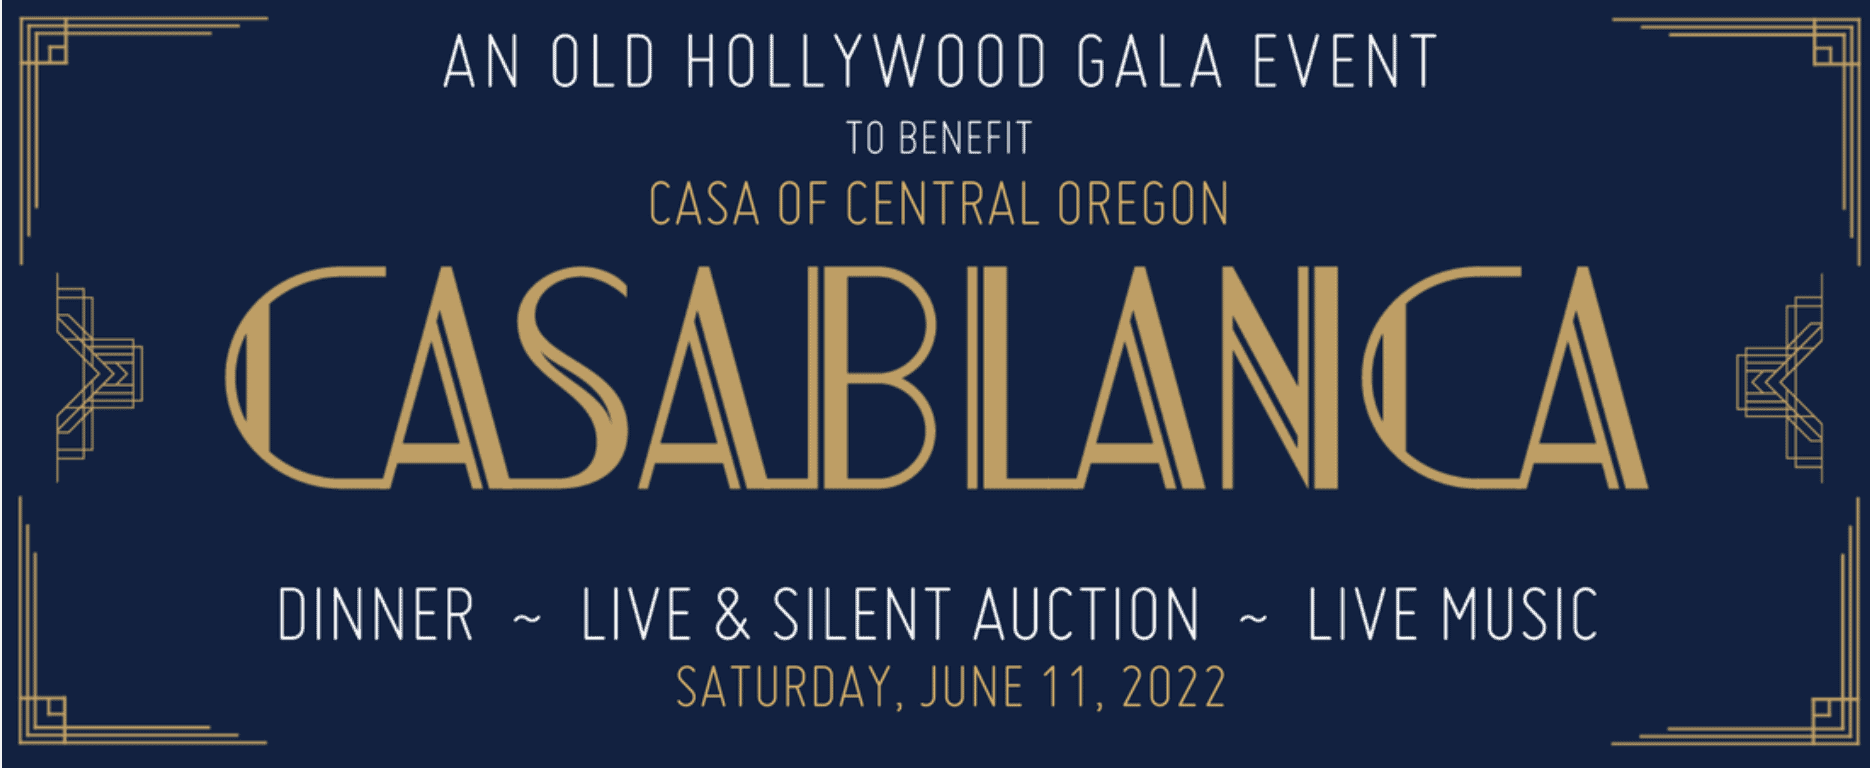 CASABLANCA: An Old Hollywood Gala Event